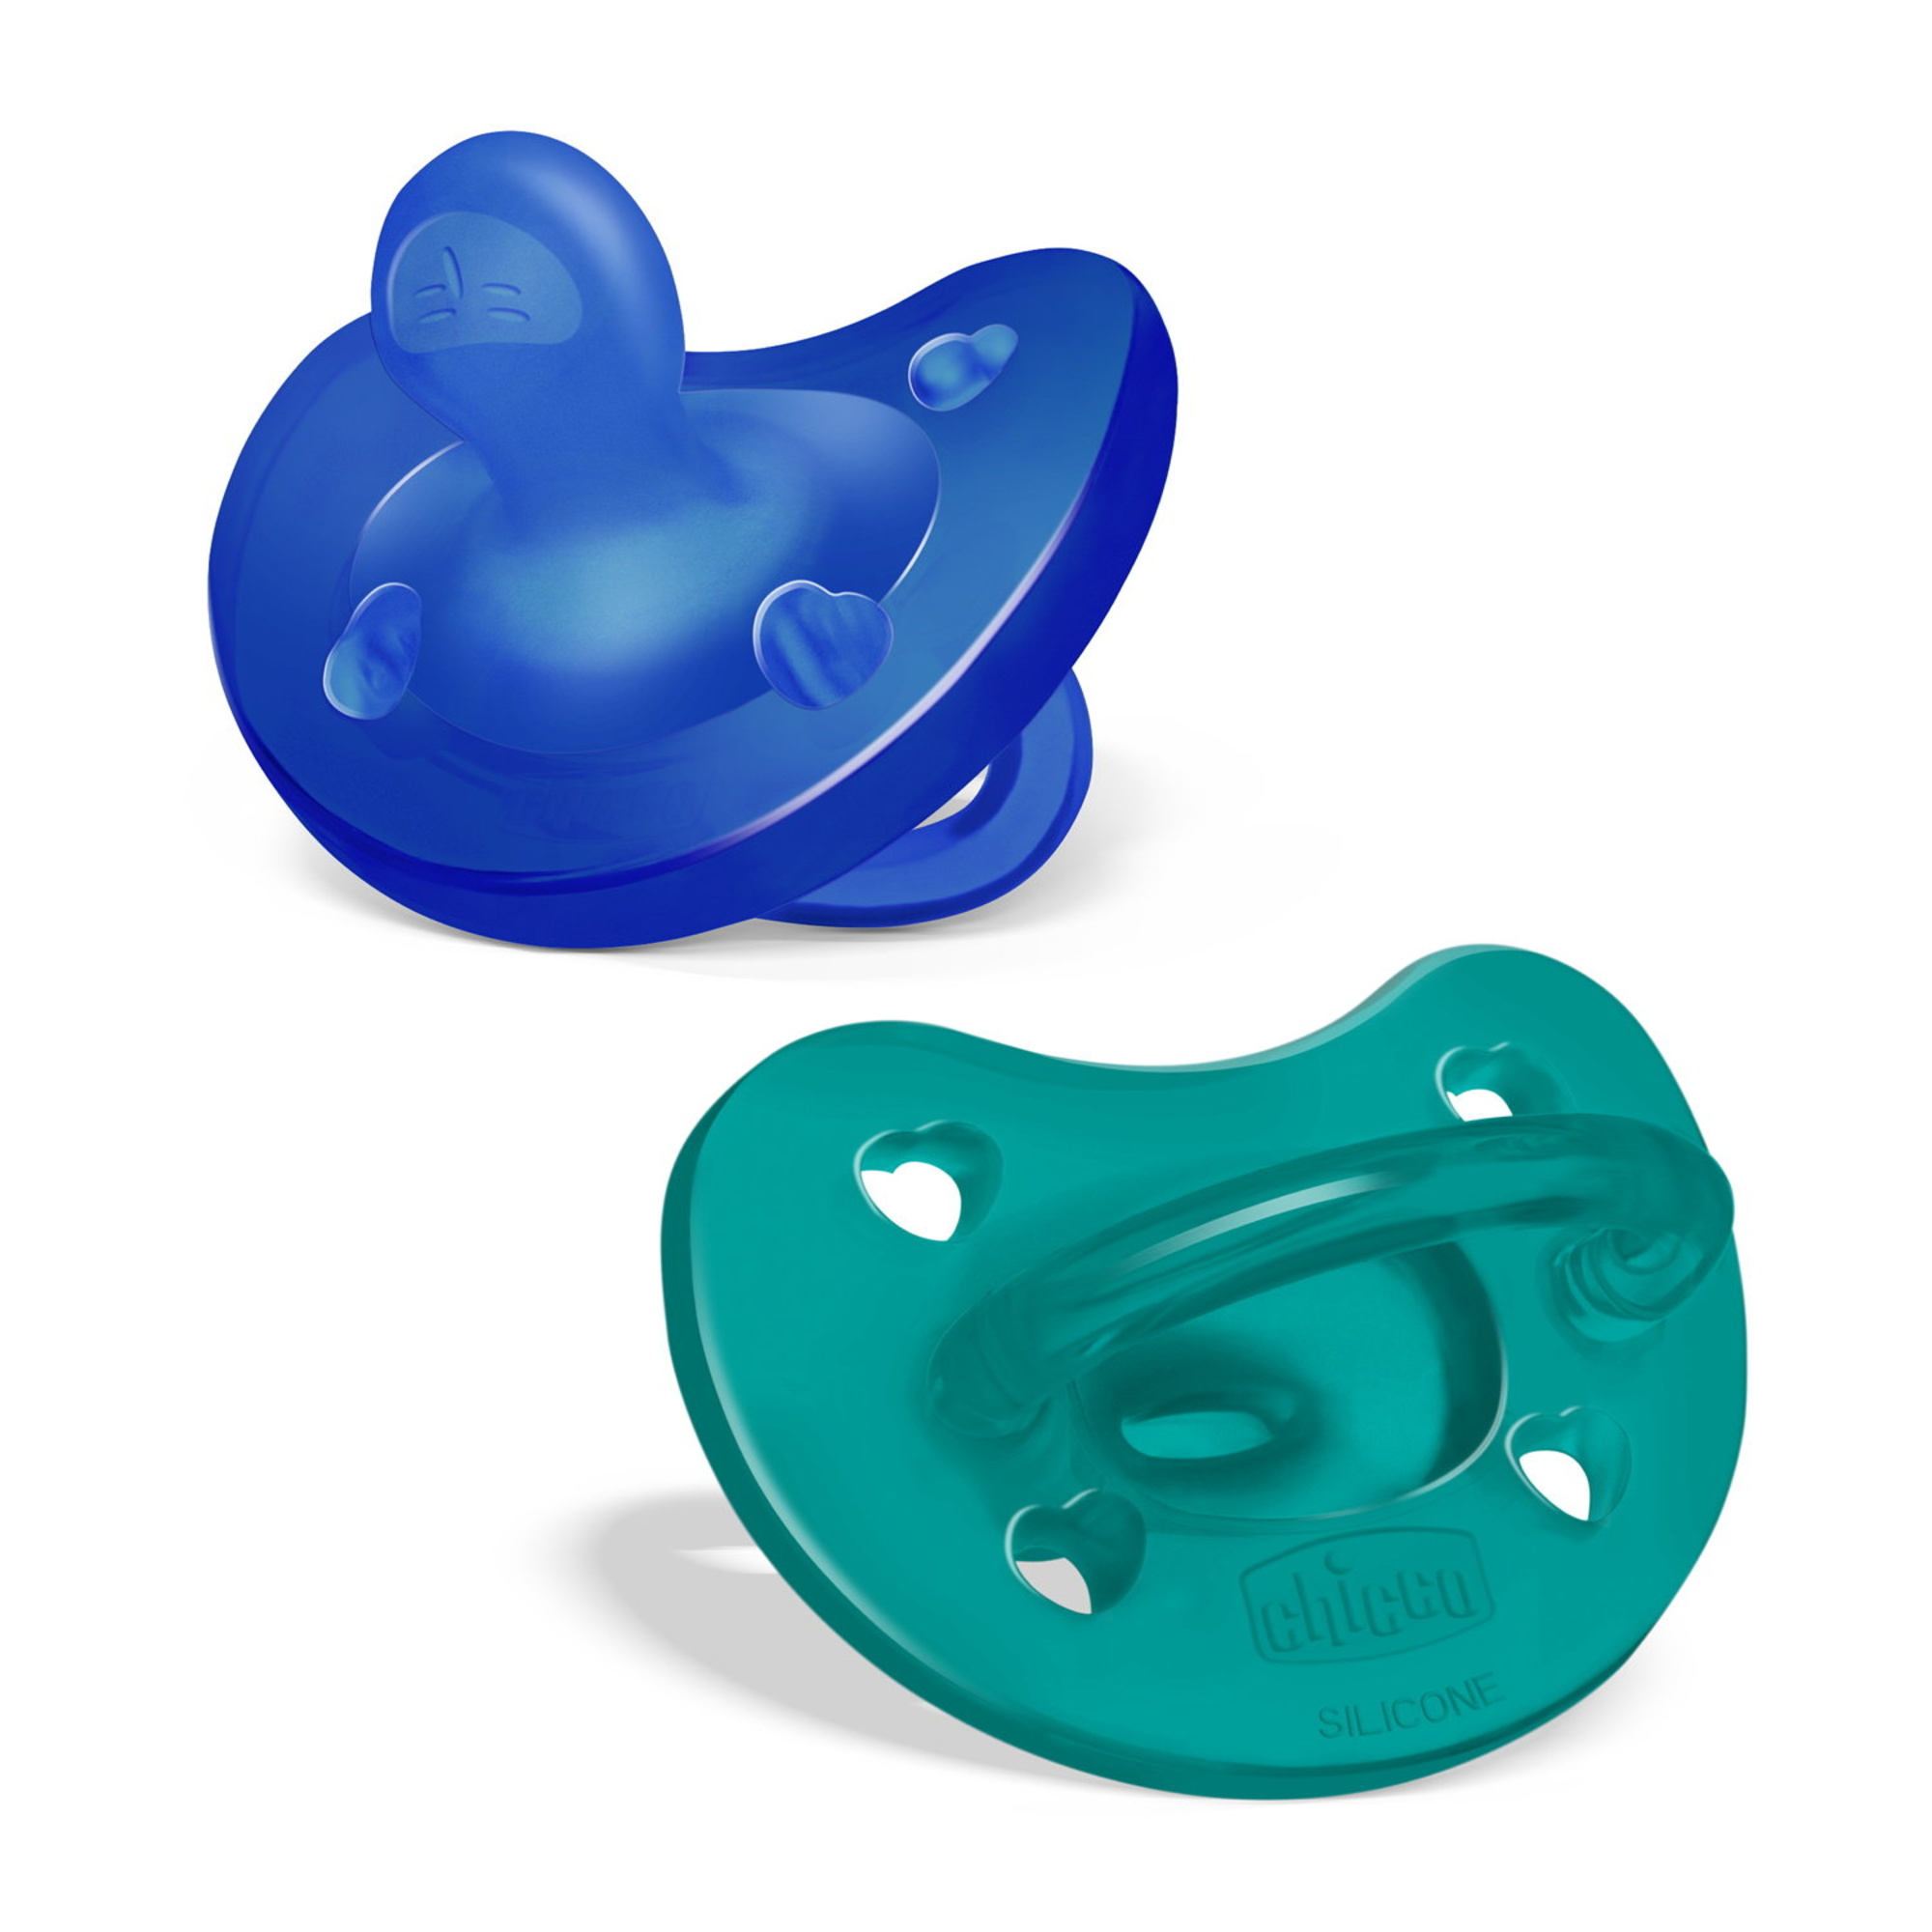 Chicco - physioforma gommotto blu/verde in silicone 2 pezzi| 16-36 mesi - Chicco